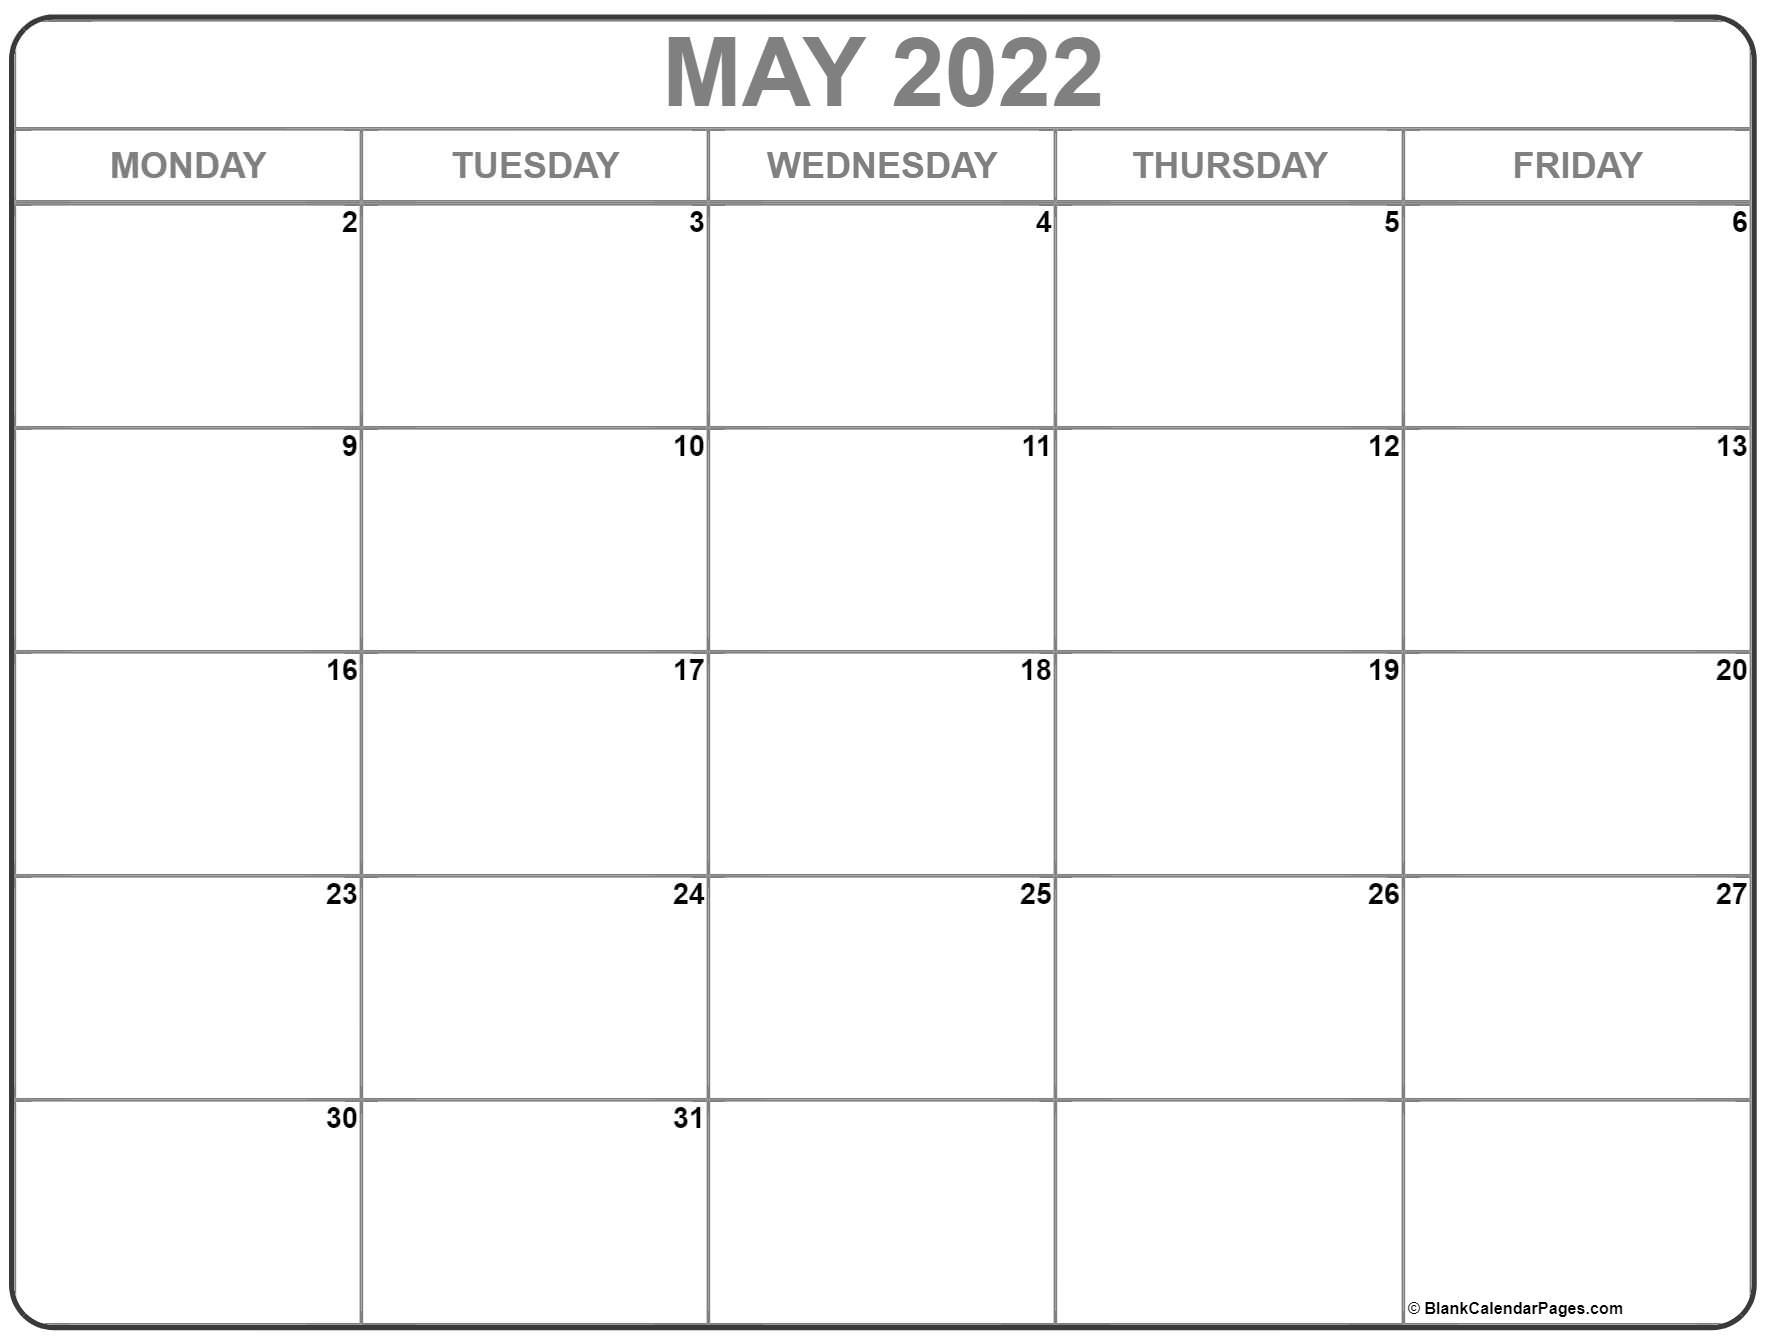 May 2022 Monday Calendar | Monday To Sunday